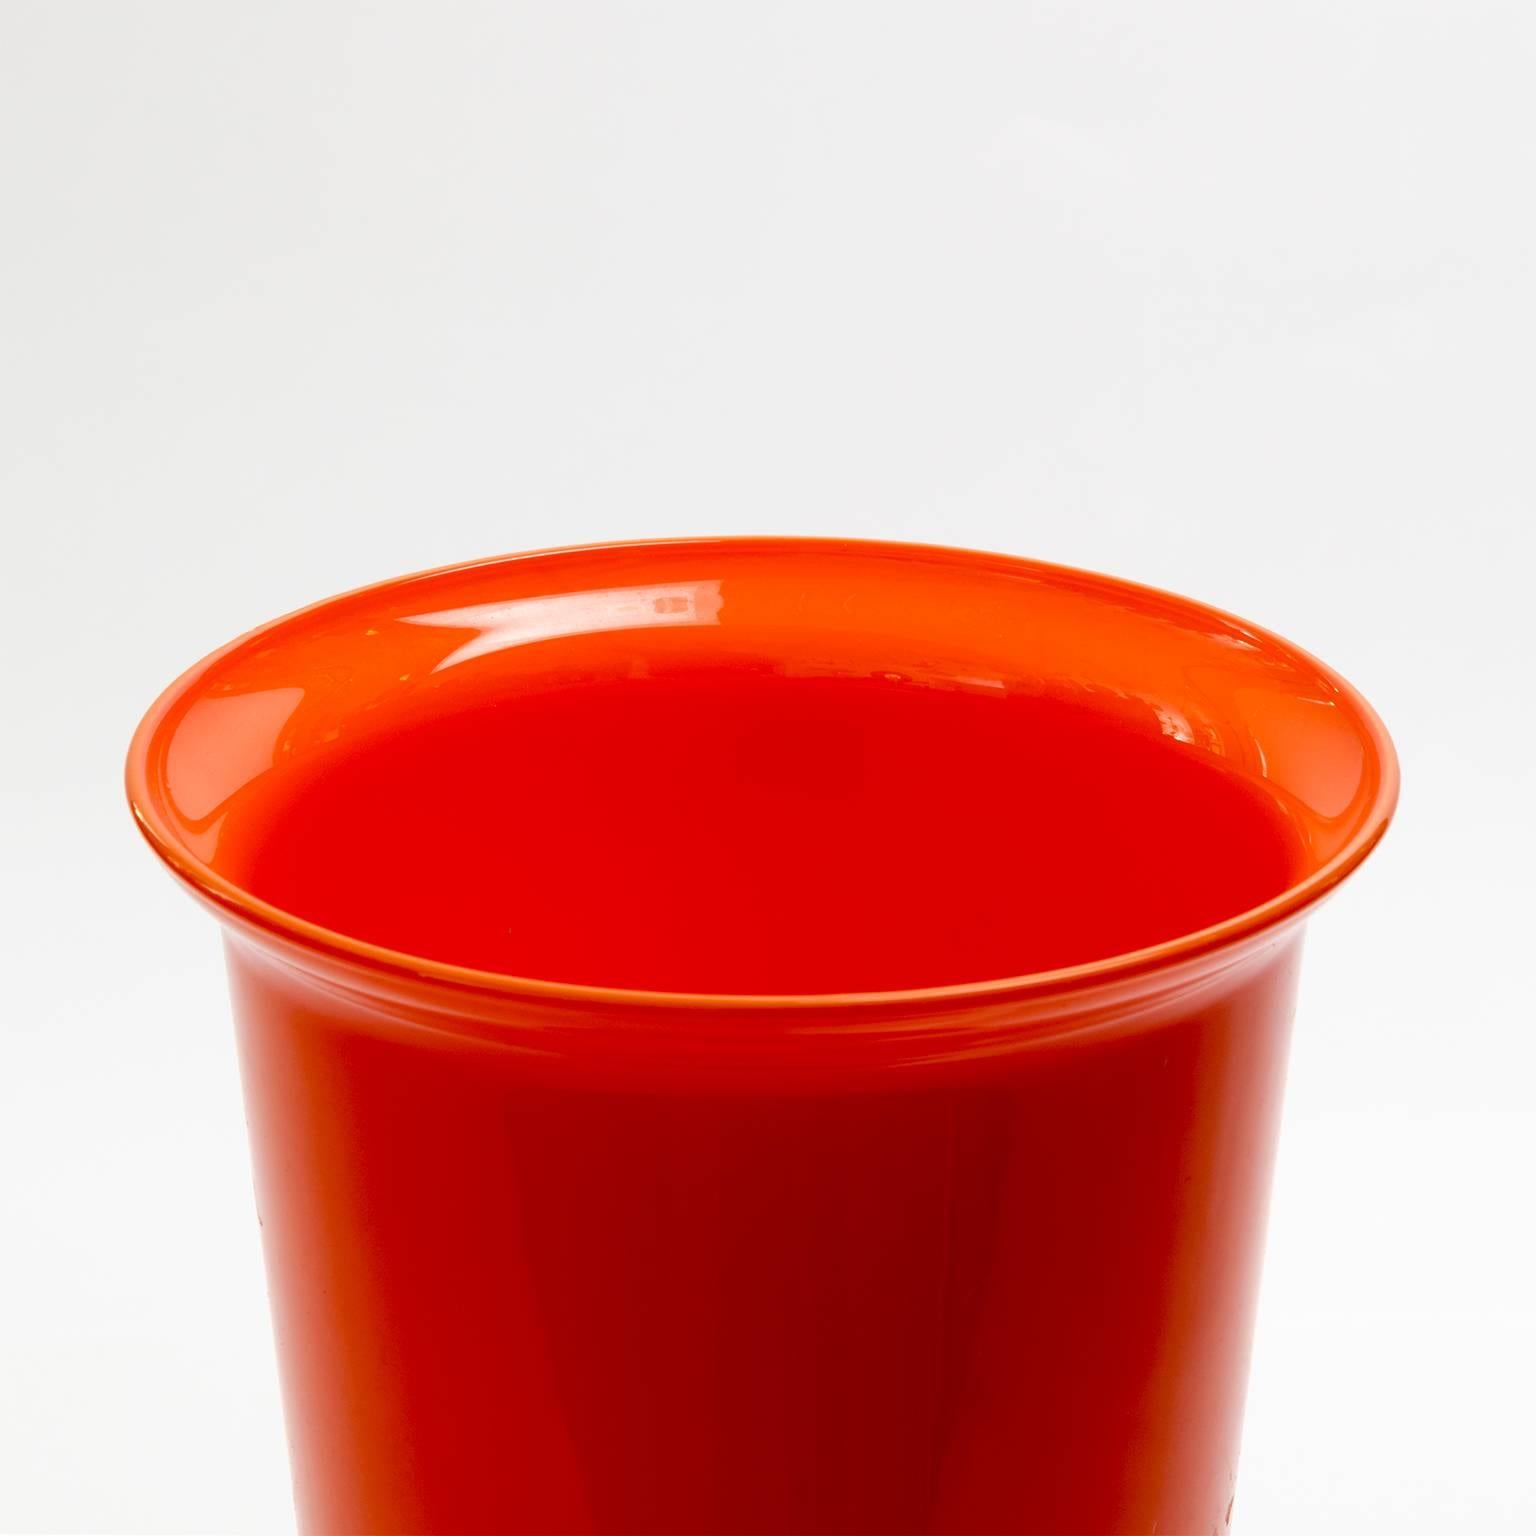 red orange vase